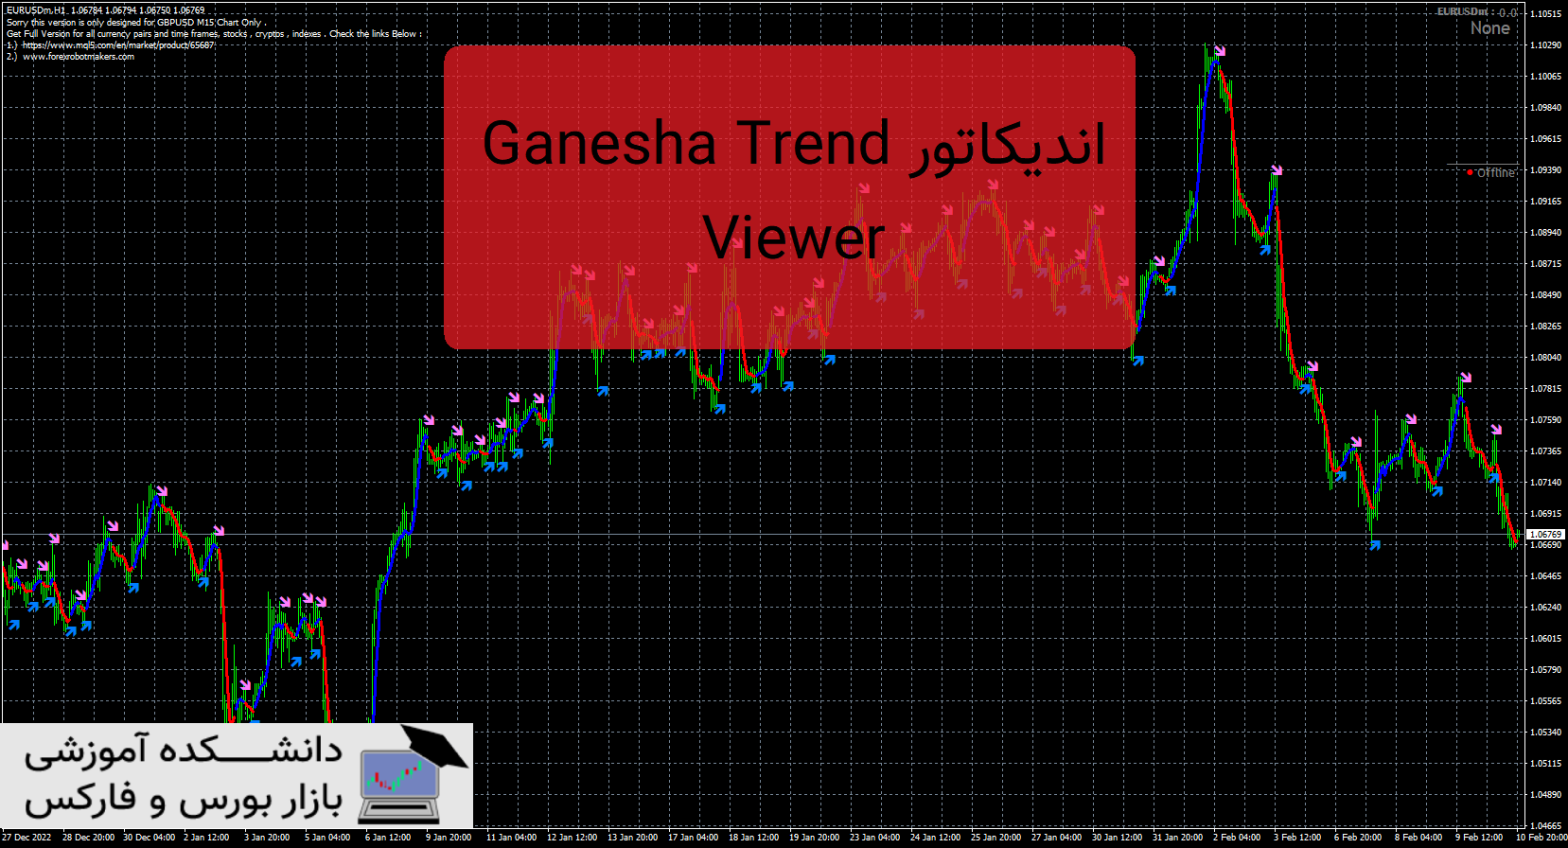 Ganesha Trend Viewer دانلود و معرفی اندیکاتور